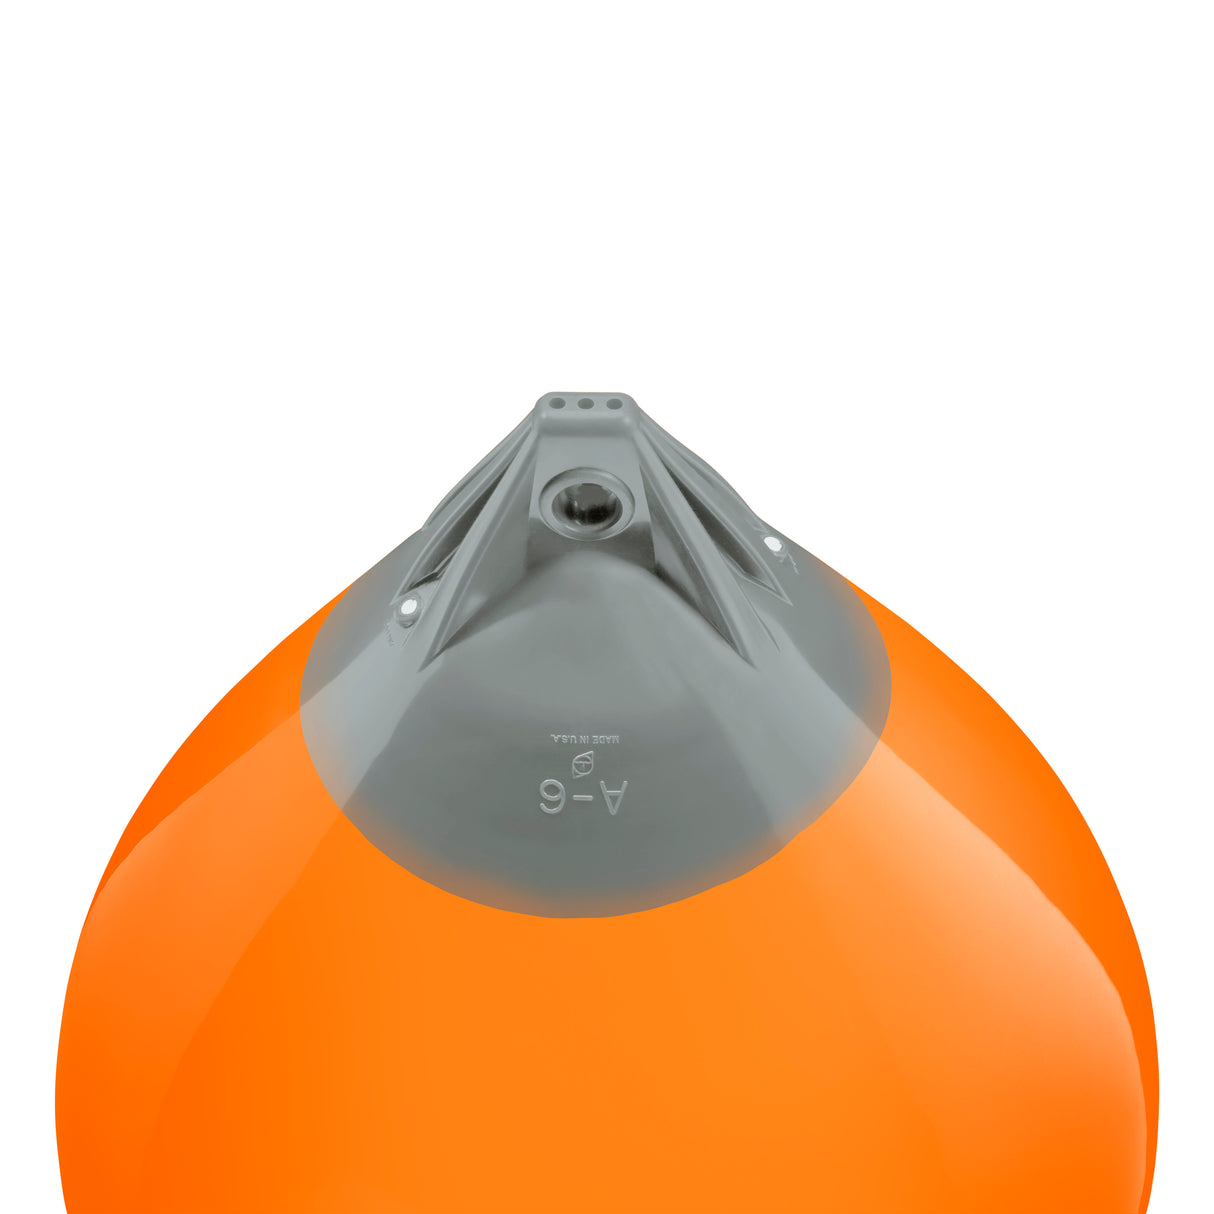 Orange buoy with Grey-Top, Polyform A-6 angled shot